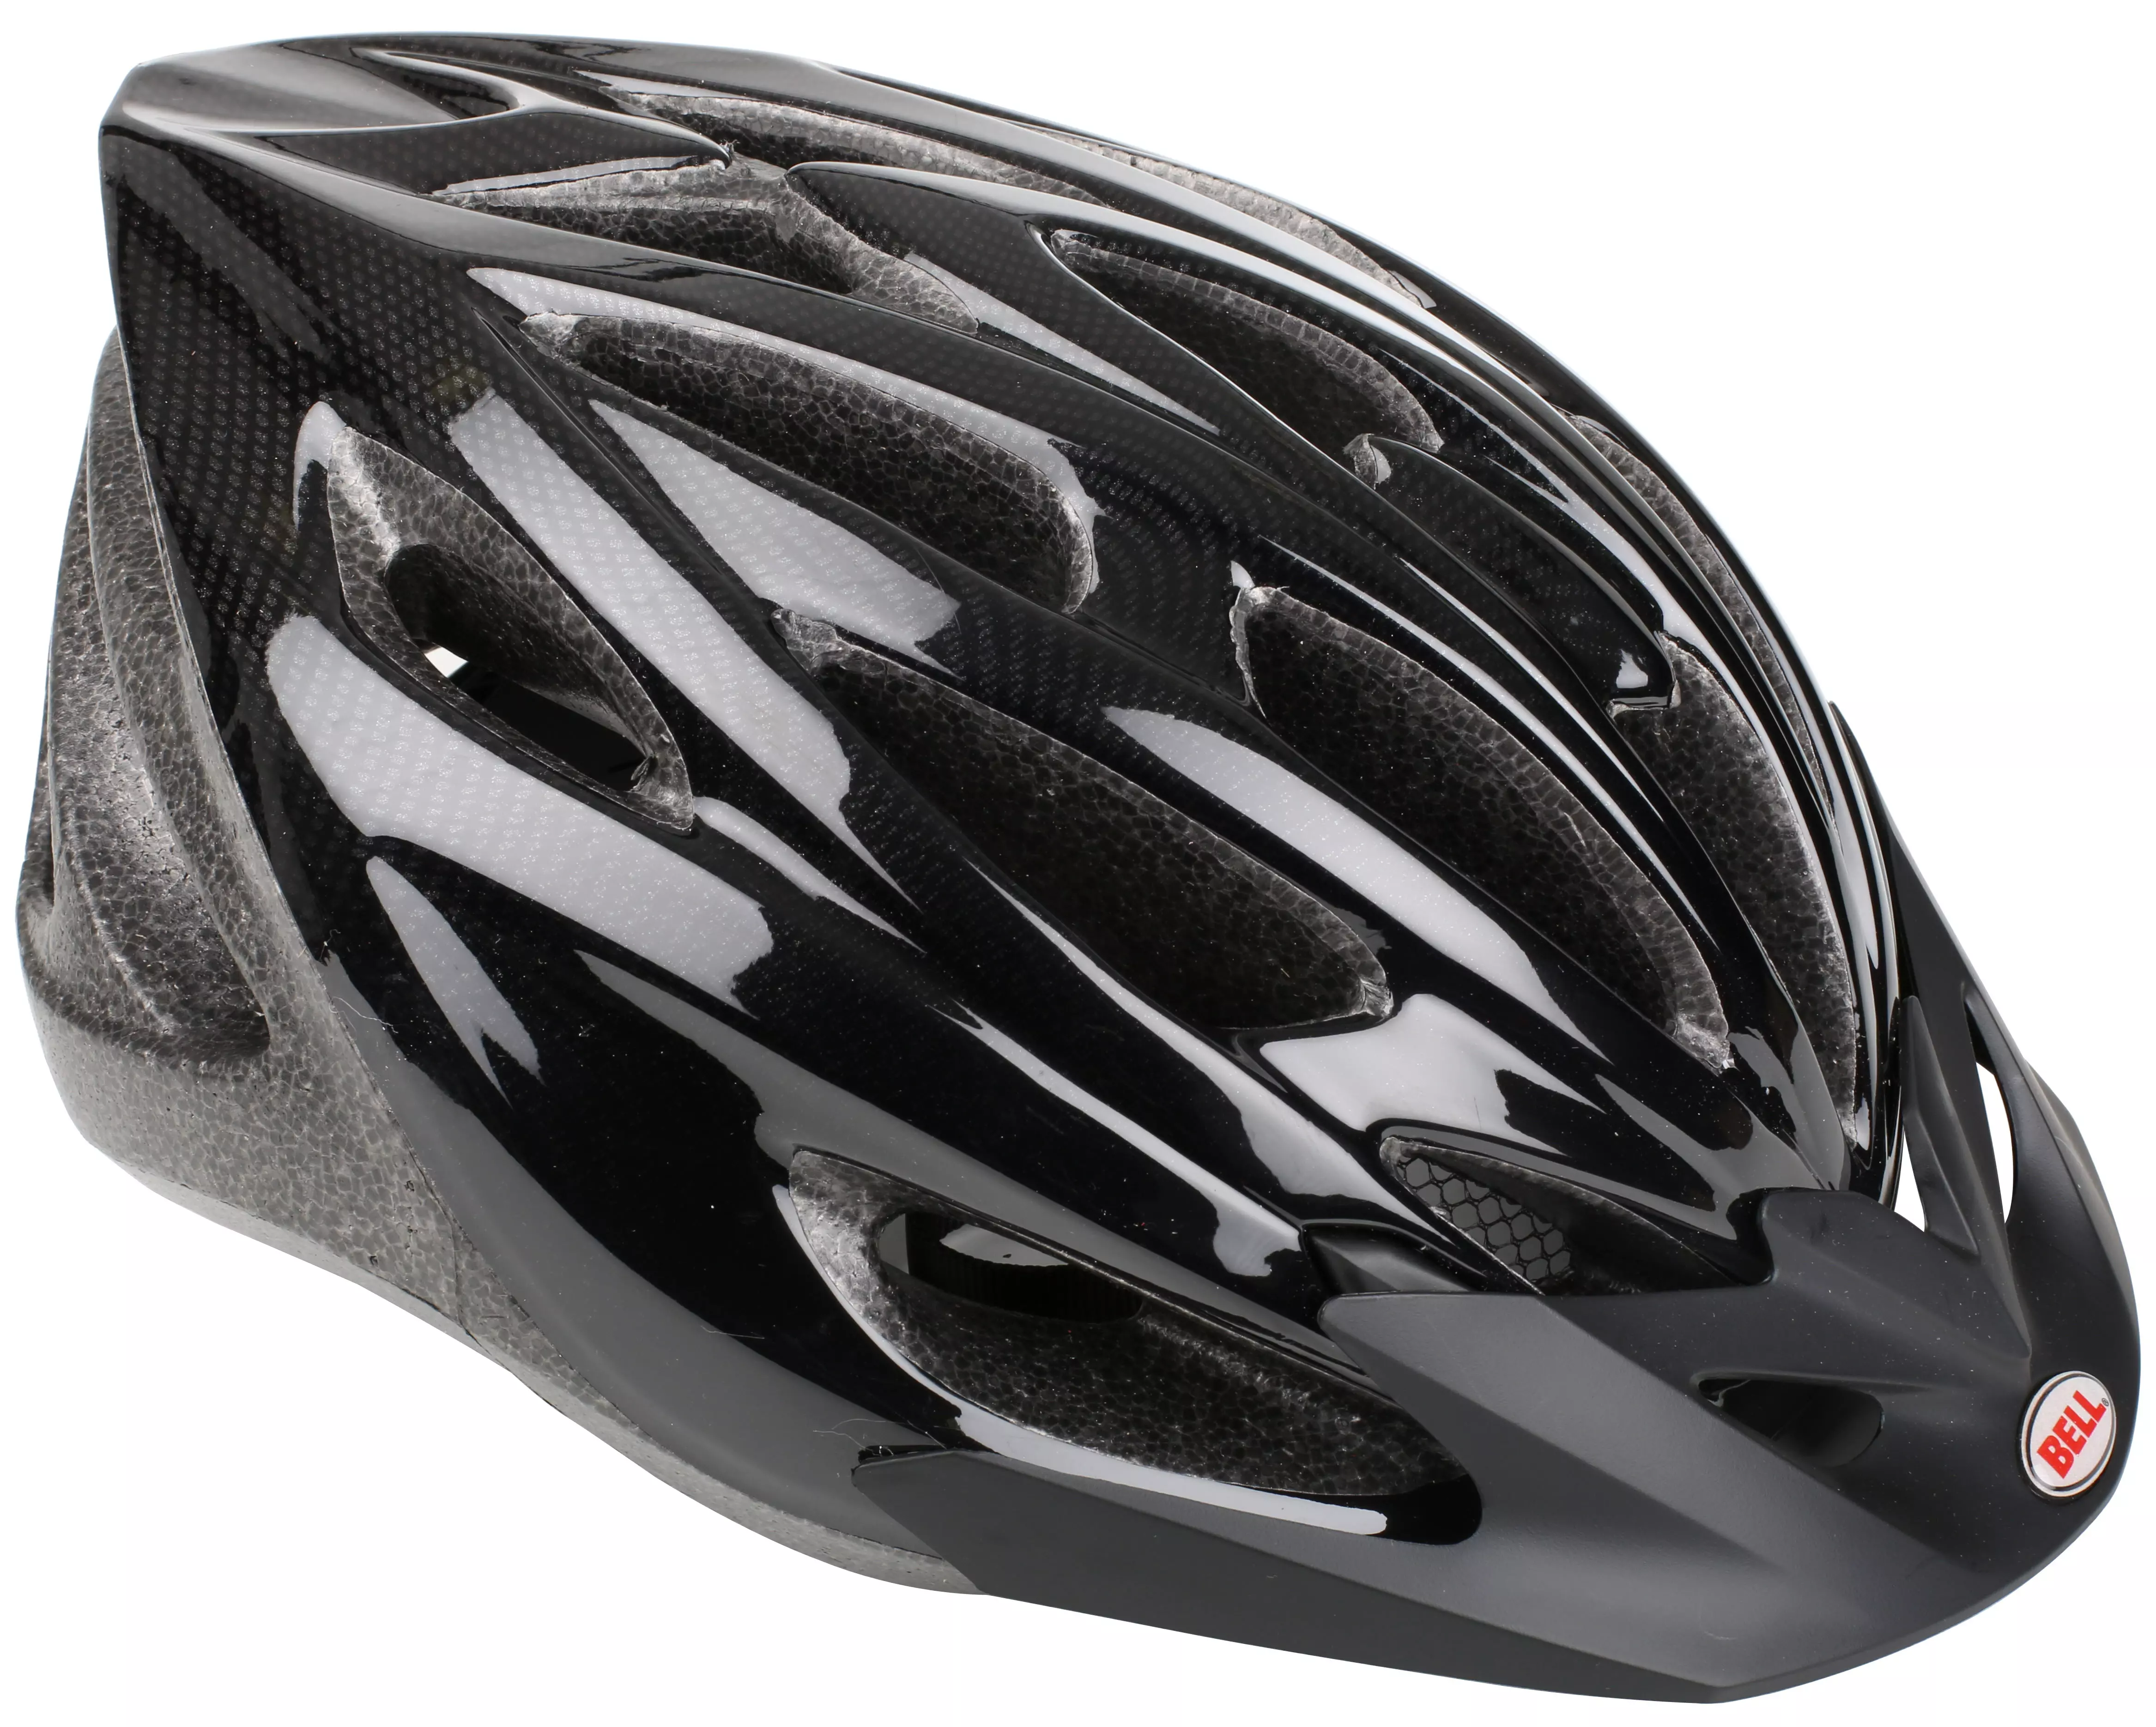 65cm bike helmet